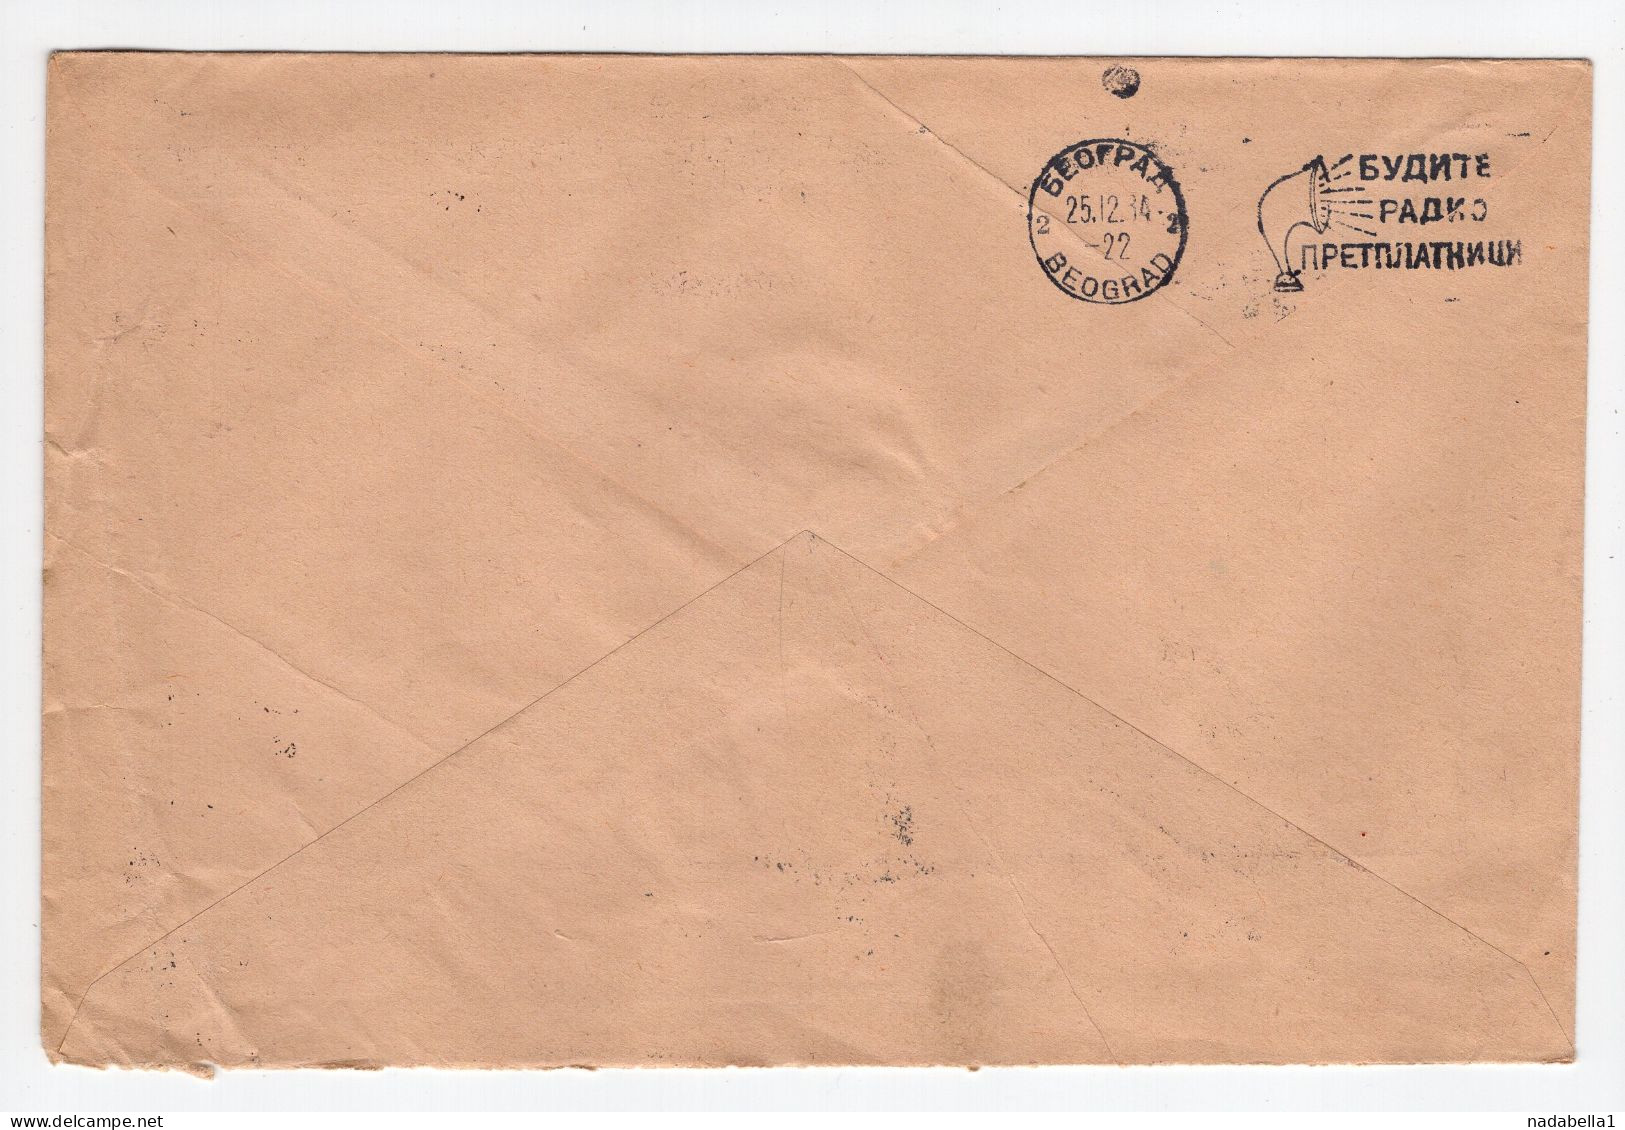 1934. KINGDOM OF YUGOSLAVIA,SERBIA,NOVI SAD,1.50 DIN POSTAGE DUE IN BELGRADE,AIR FORCE COMMAND COVER,BLACK FRAME - Postage Due